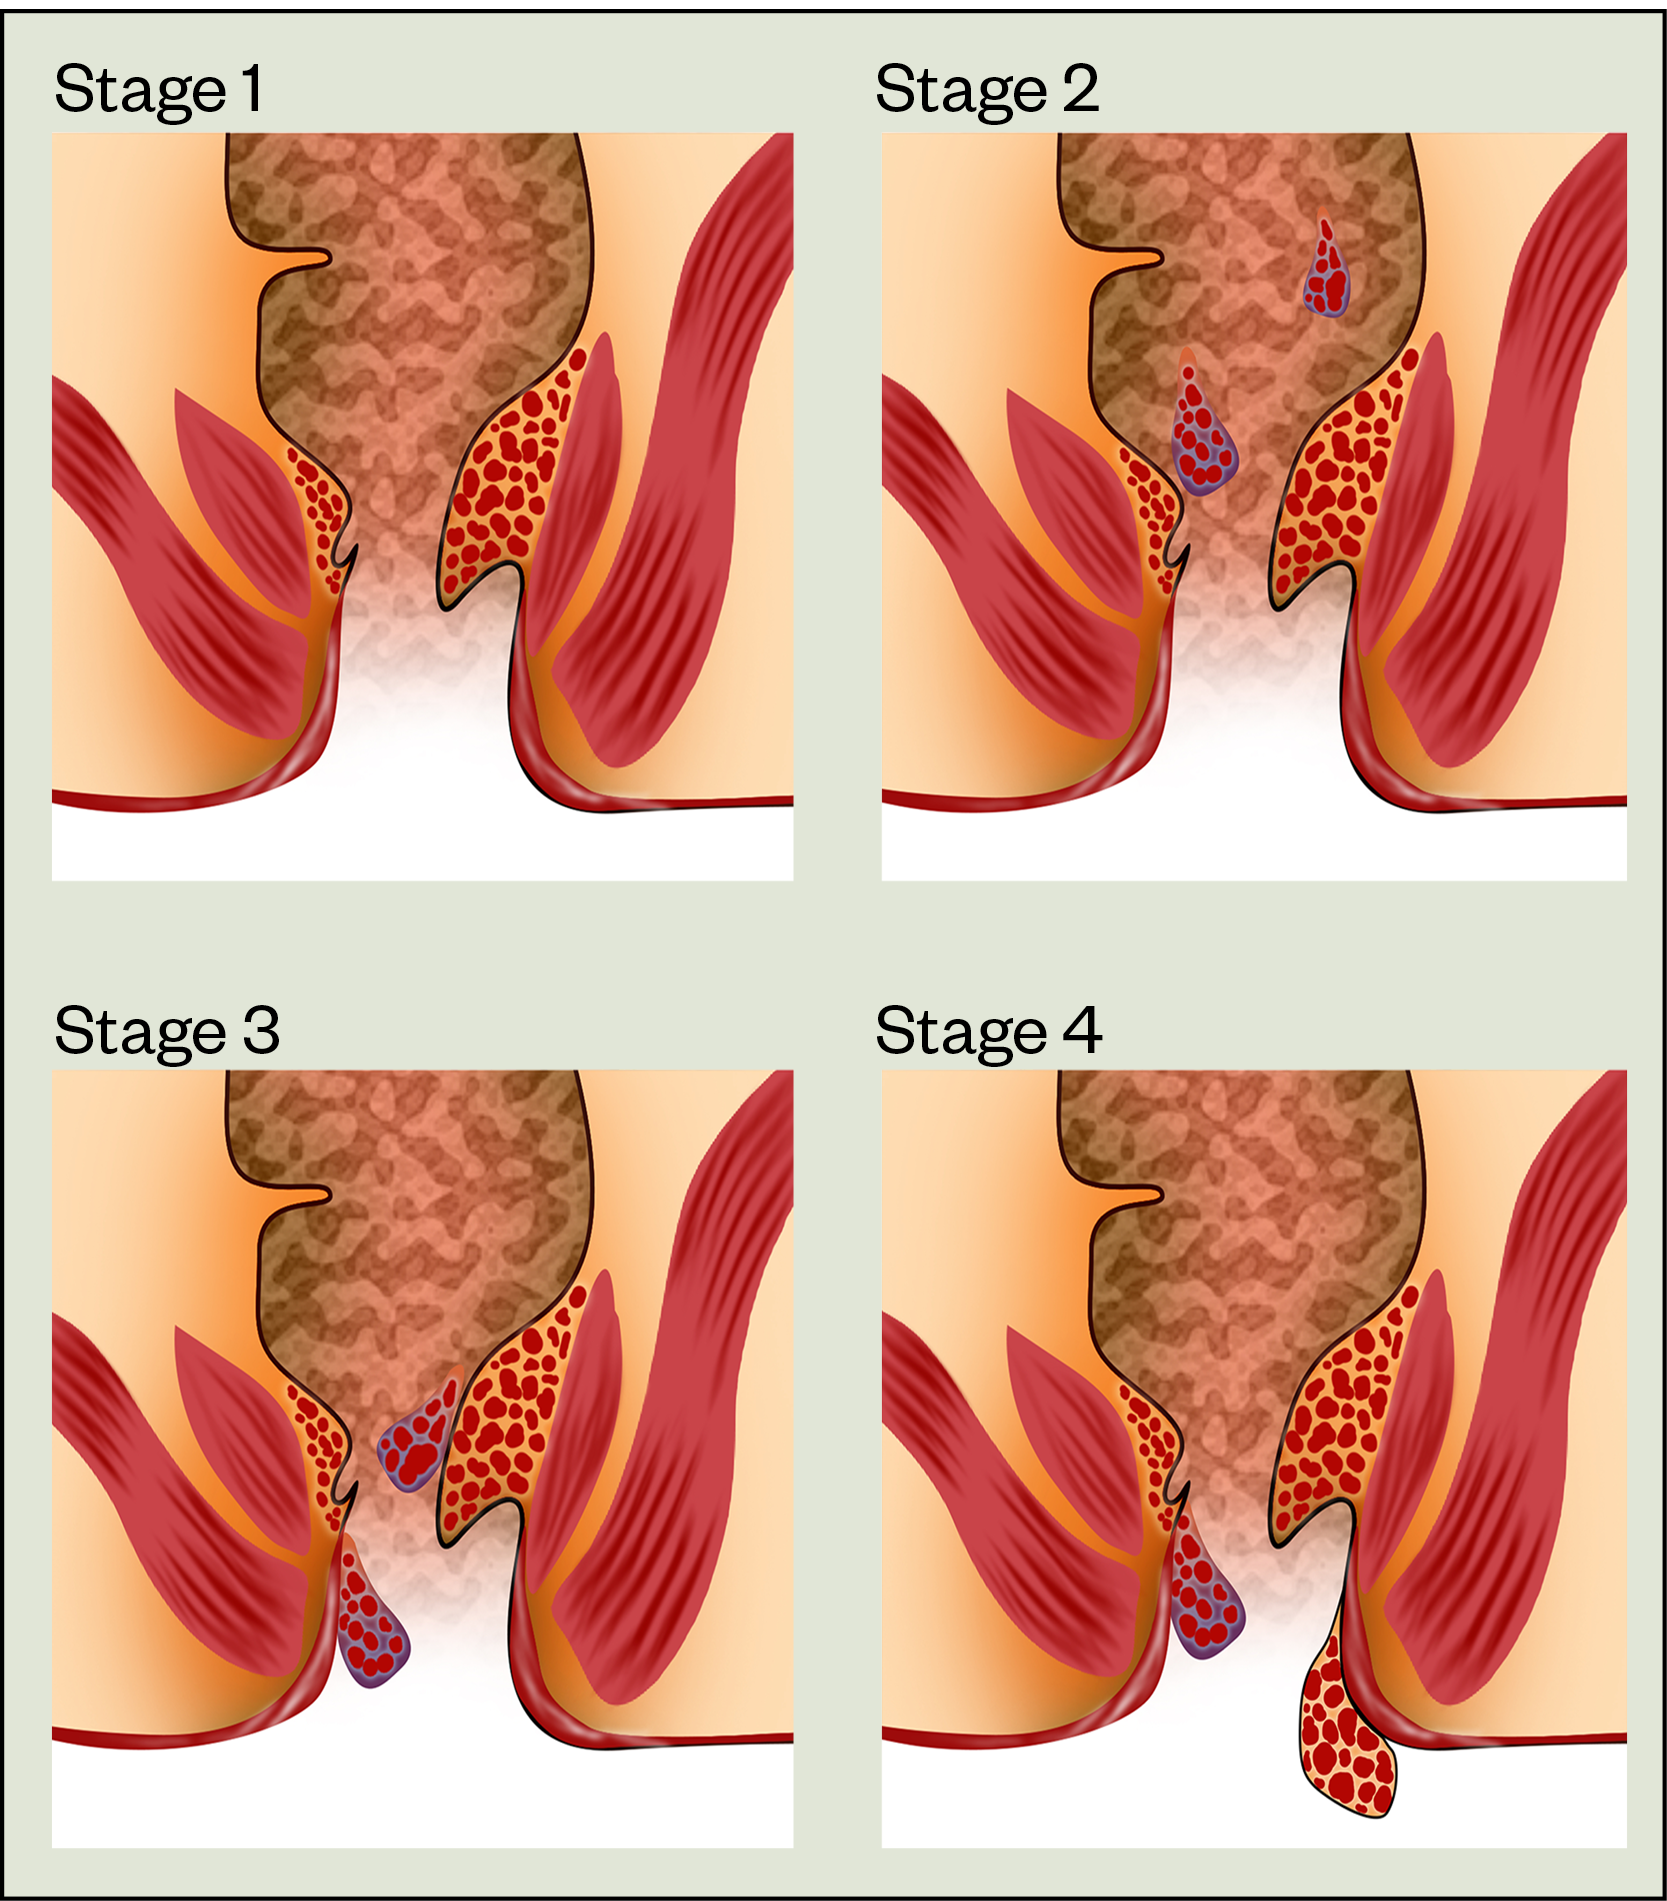 Figure 2: Goligher staging of haemorrhoids